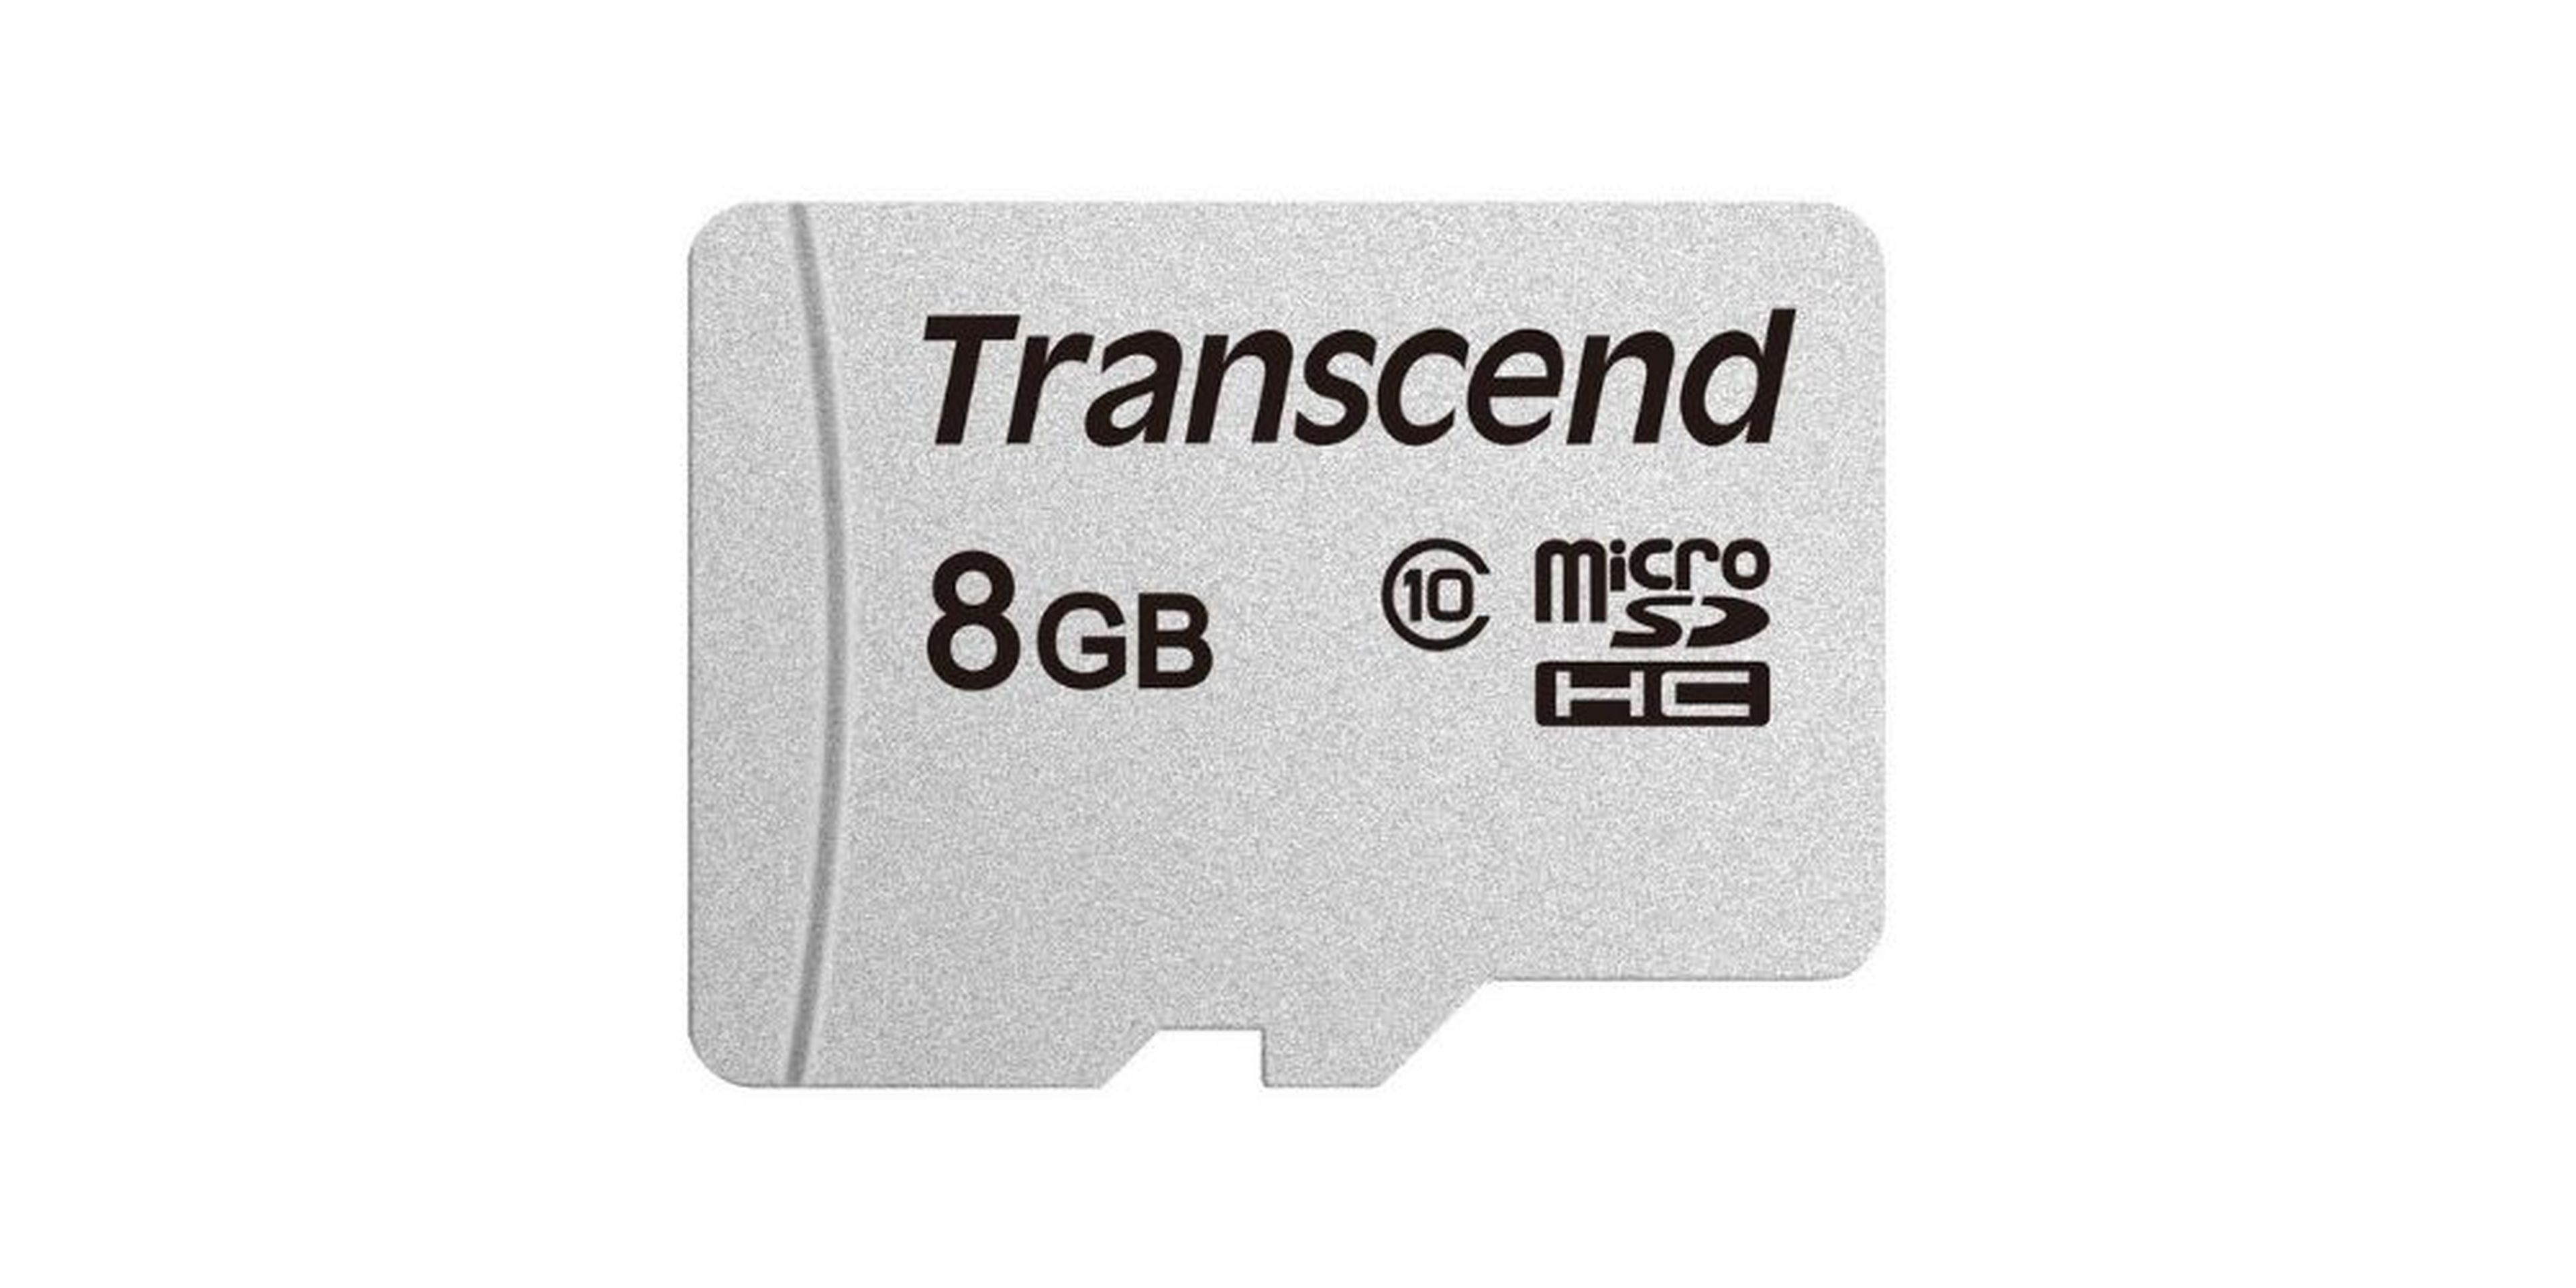 Mejor tarjeta microSD calidad/precio